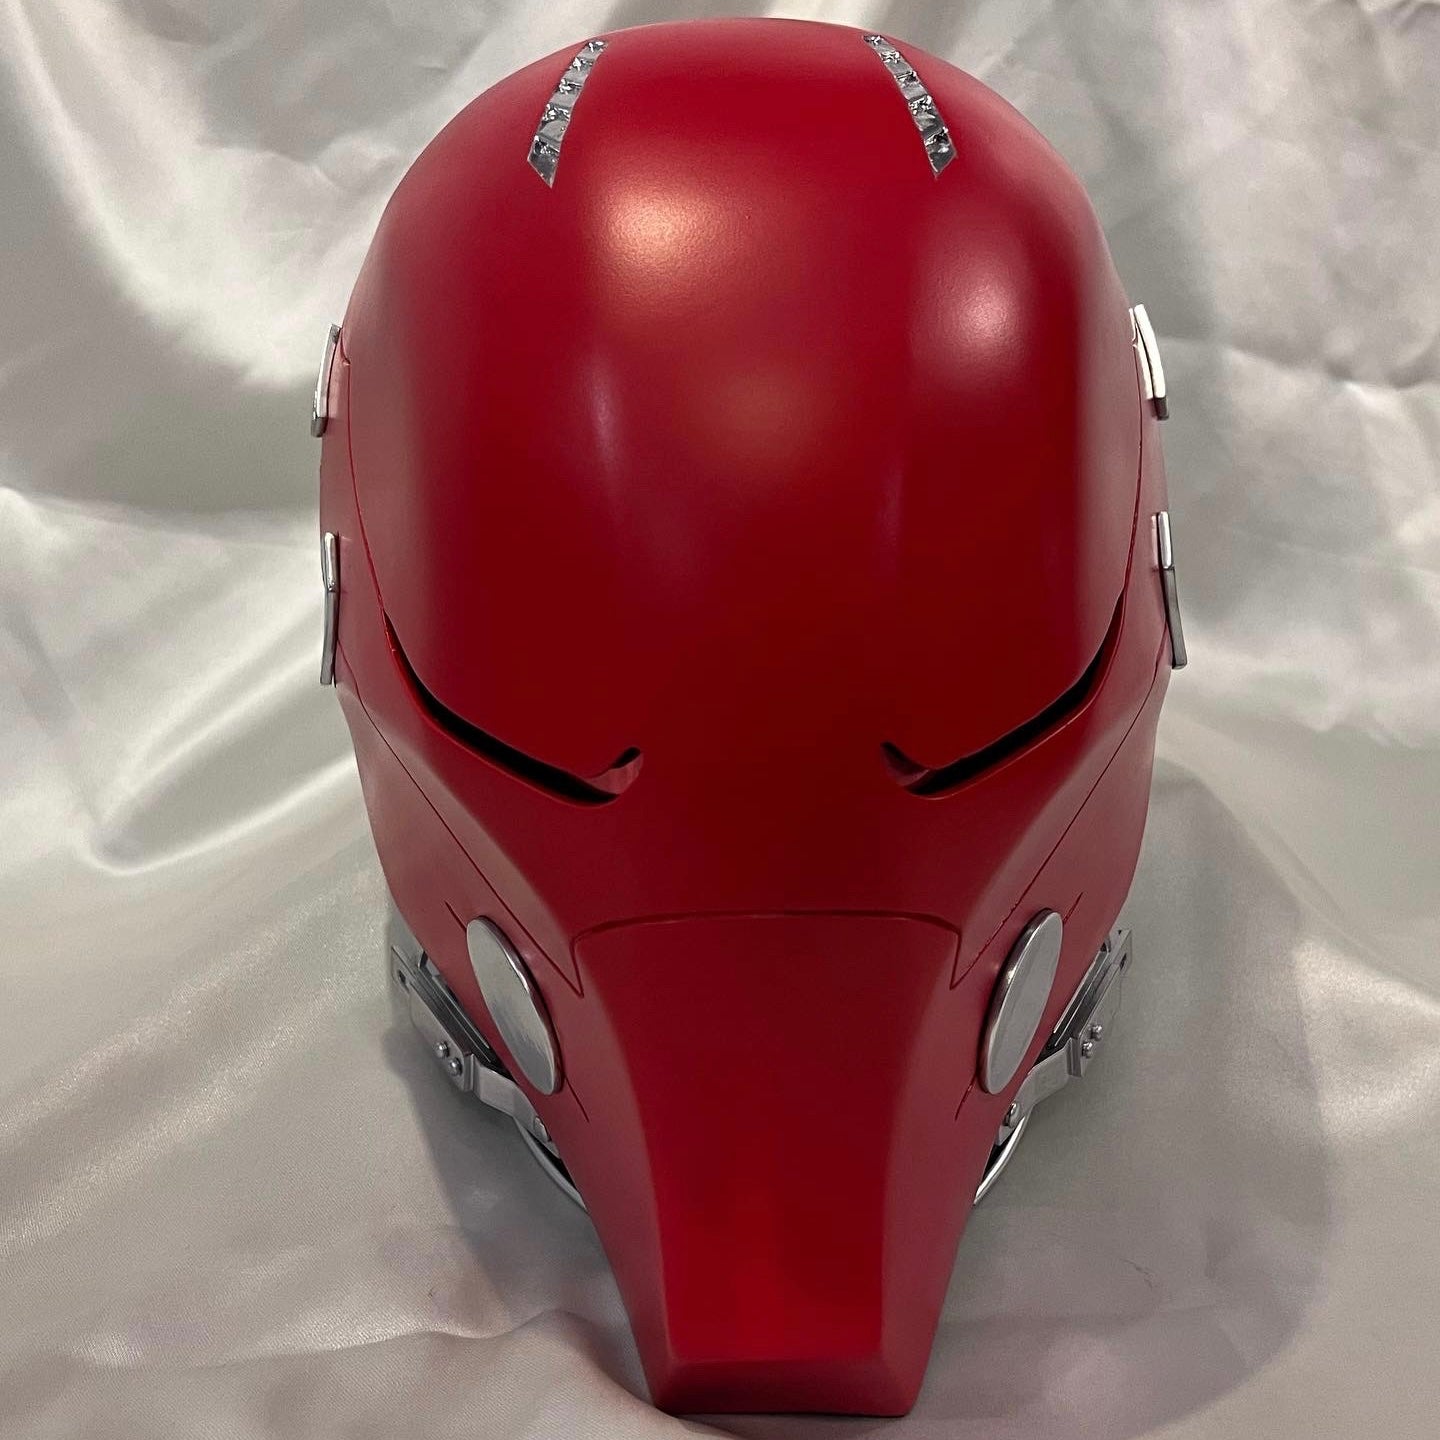 Custom Arkham Knight Red Hood Replica Display Helmet (Wearable and Display)